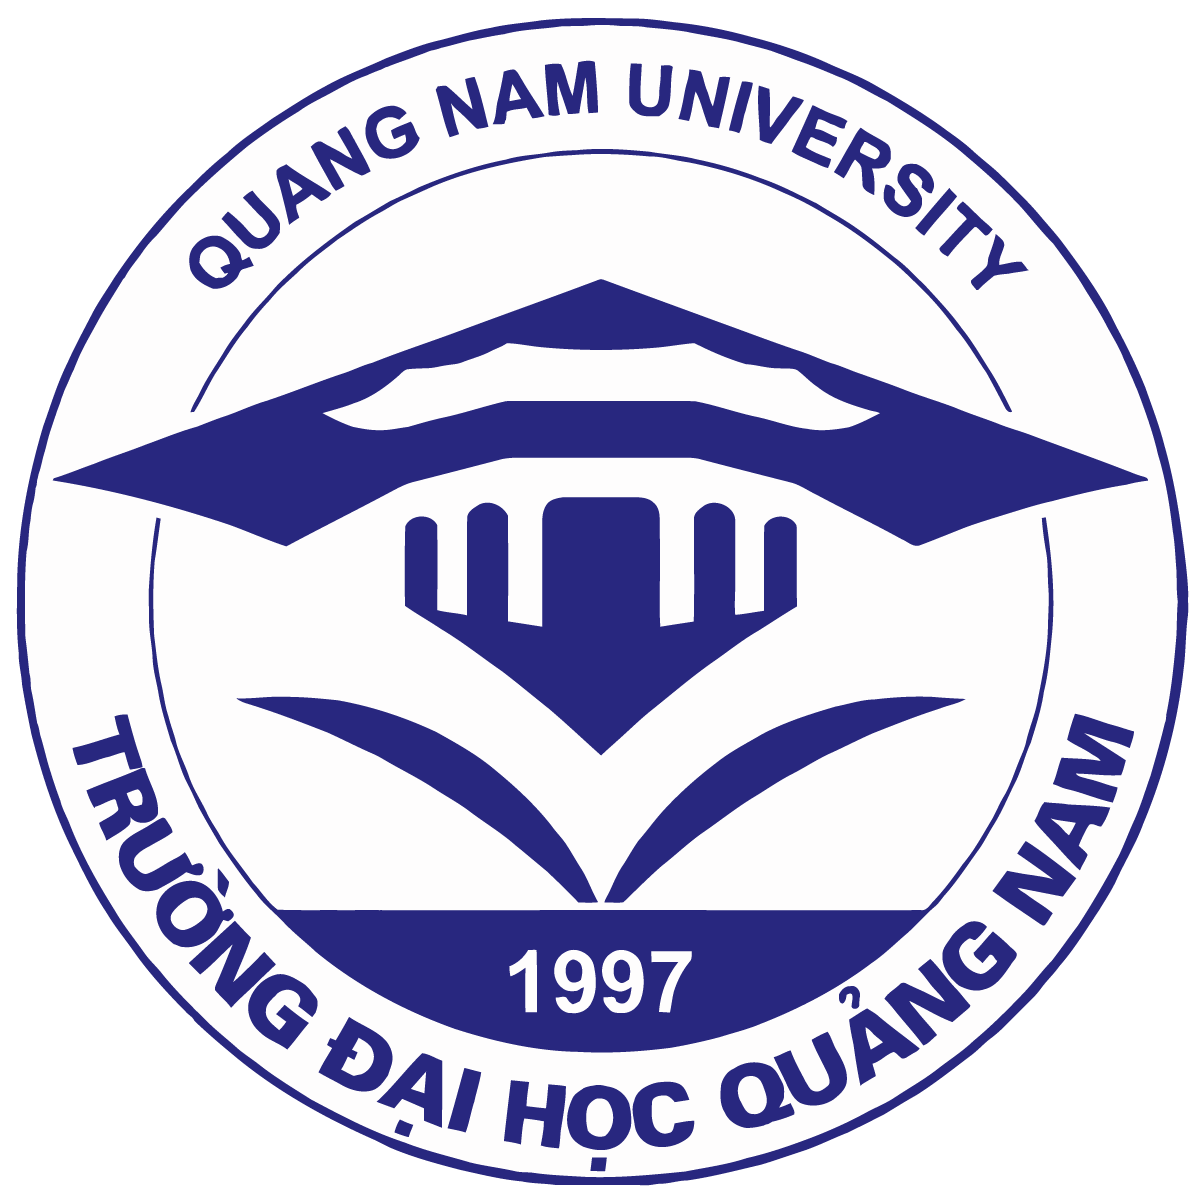 Logo Truong DH Quang Nam QNamUni 1